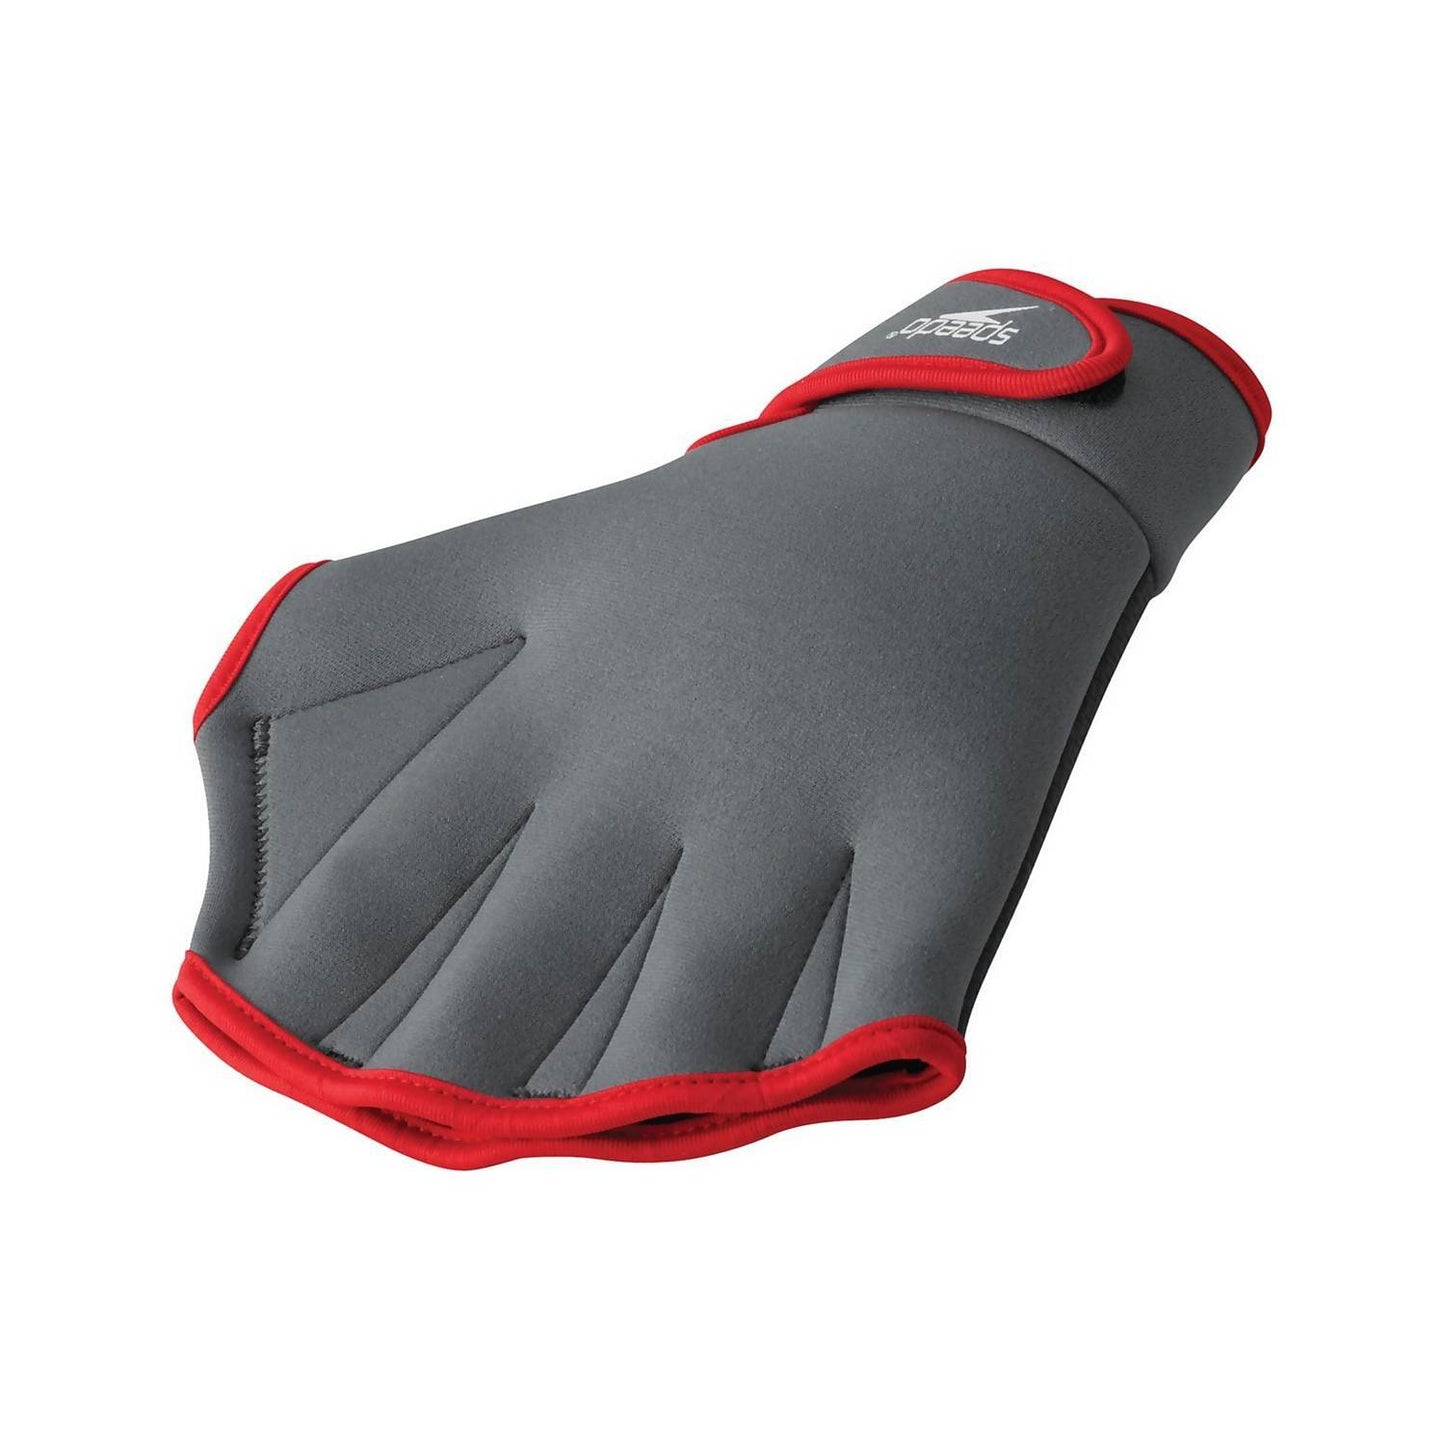 Speedo L Charcoal/Red Aquatic Fitness Gloves